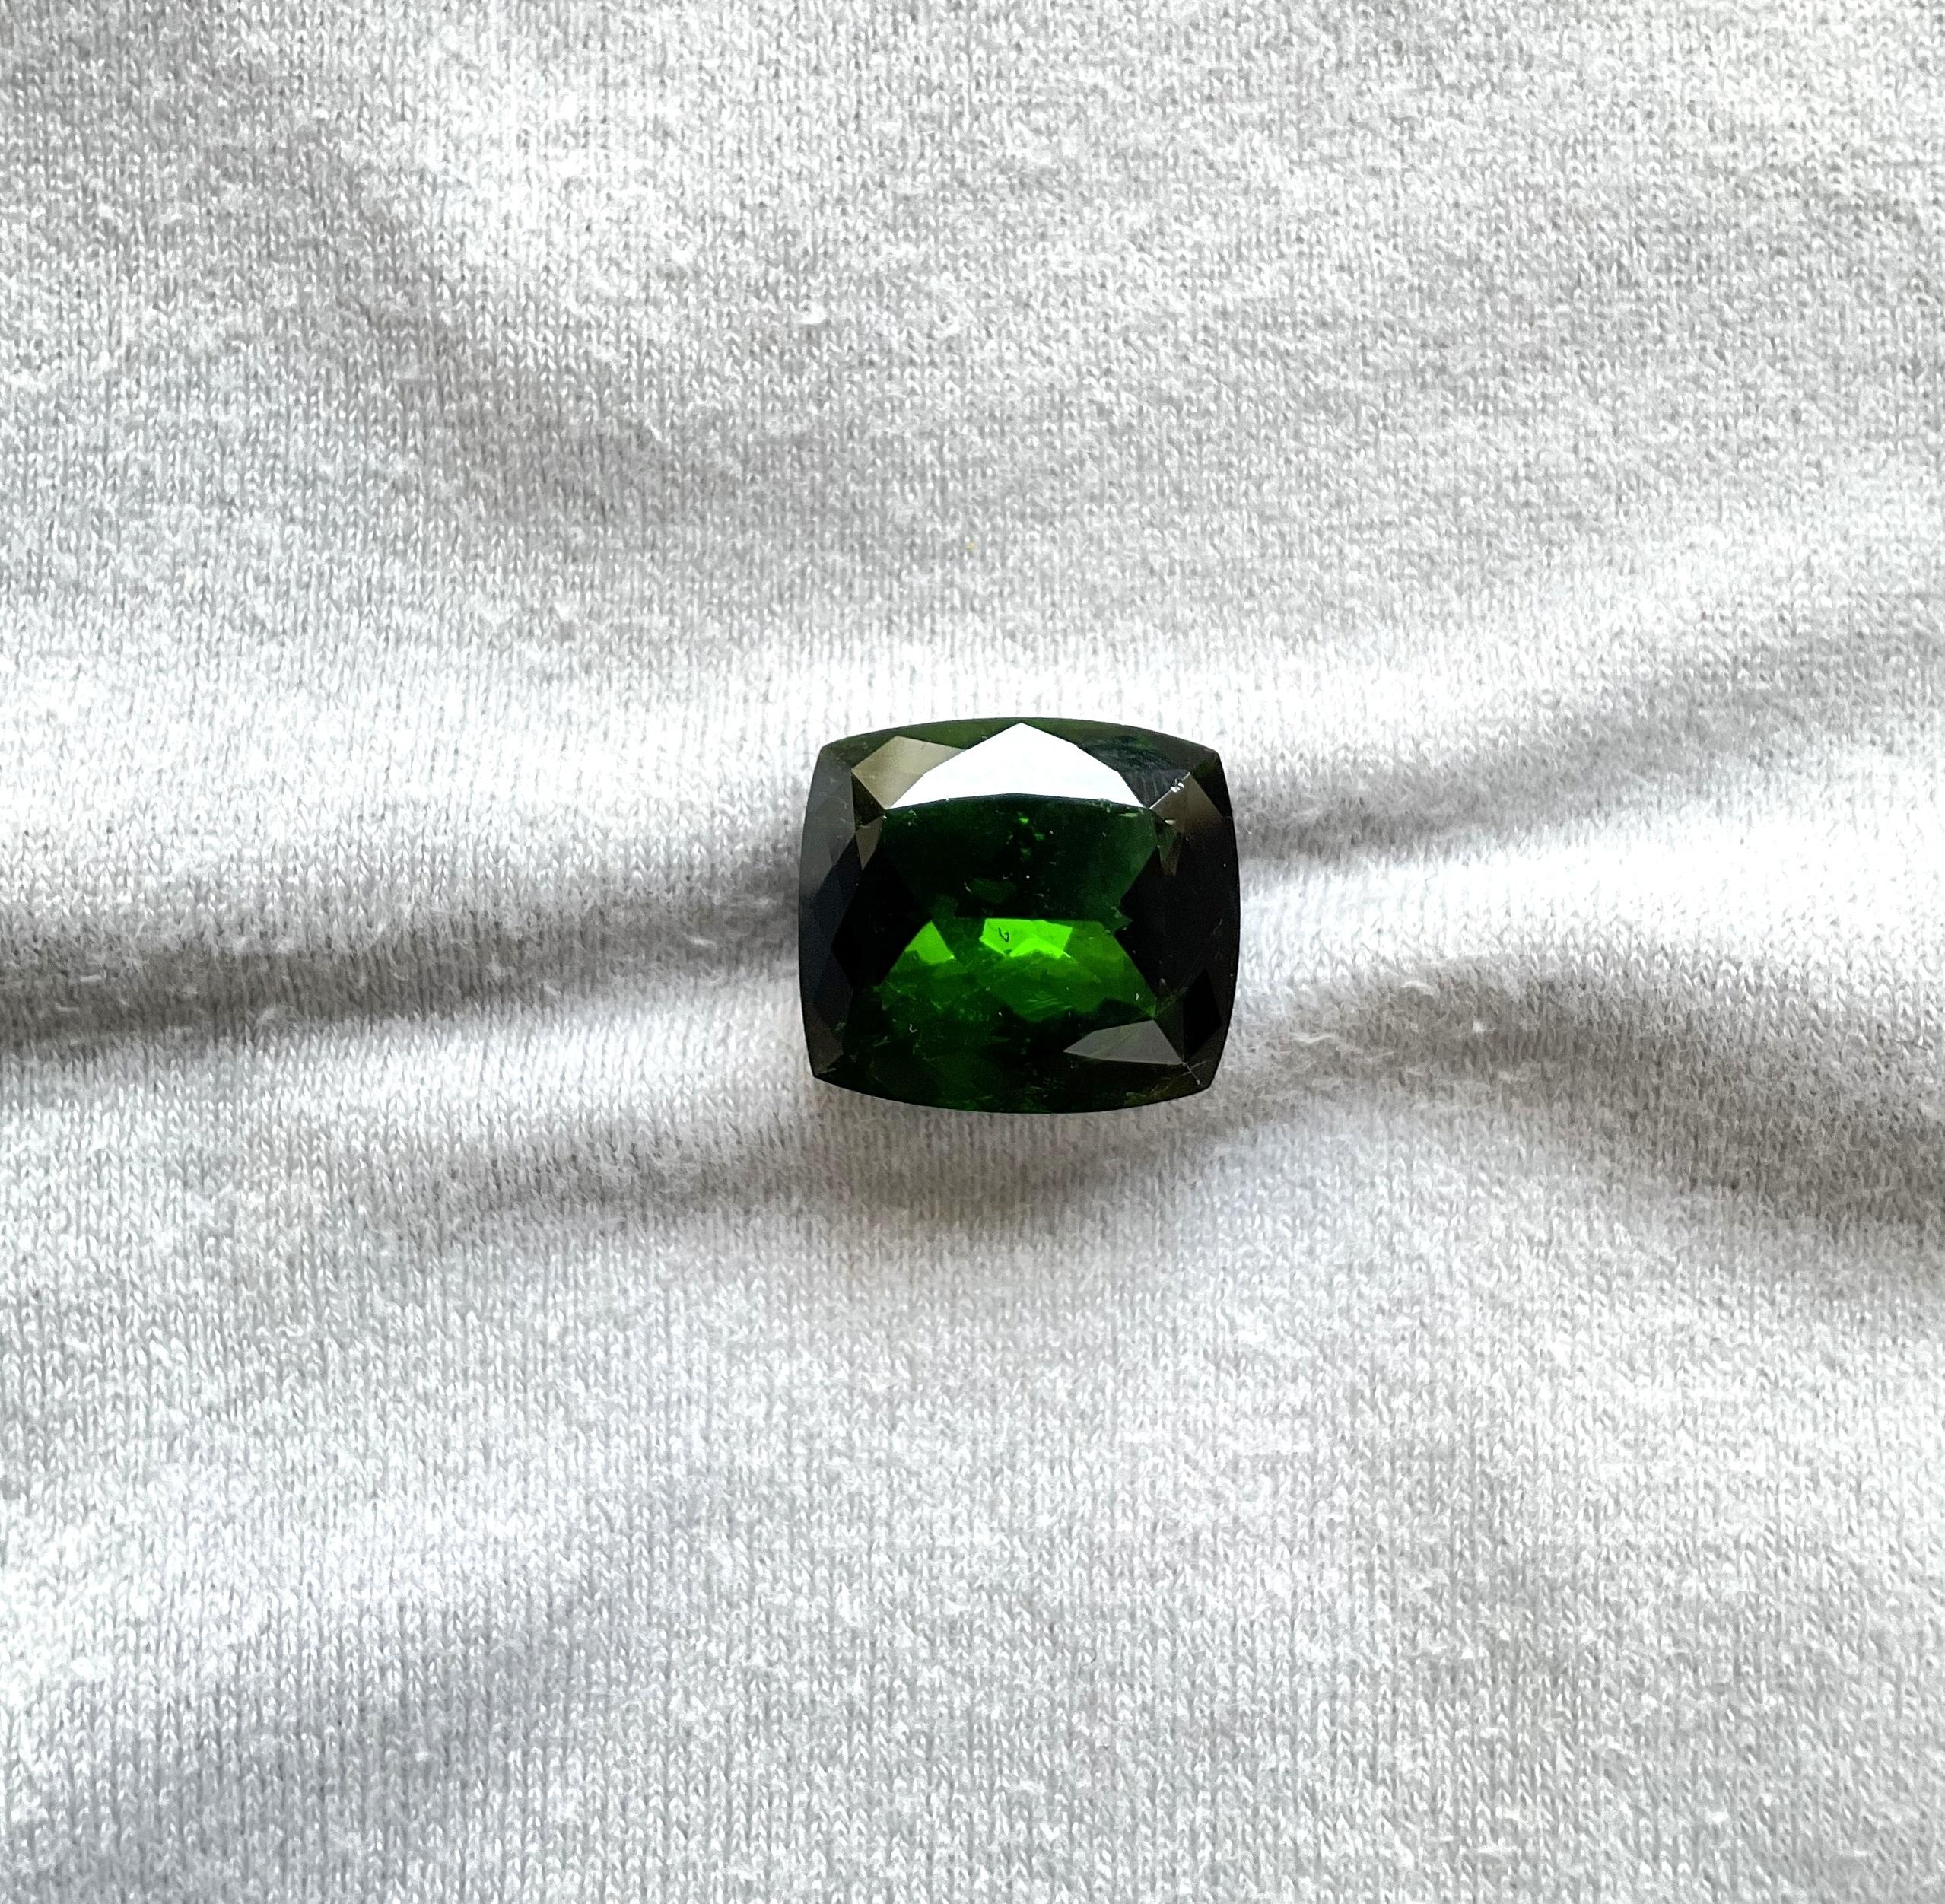 Art Deco 15.23 carats nigeria green tourmaline Top Quality Cushion Cut stone natural Gem For Sale